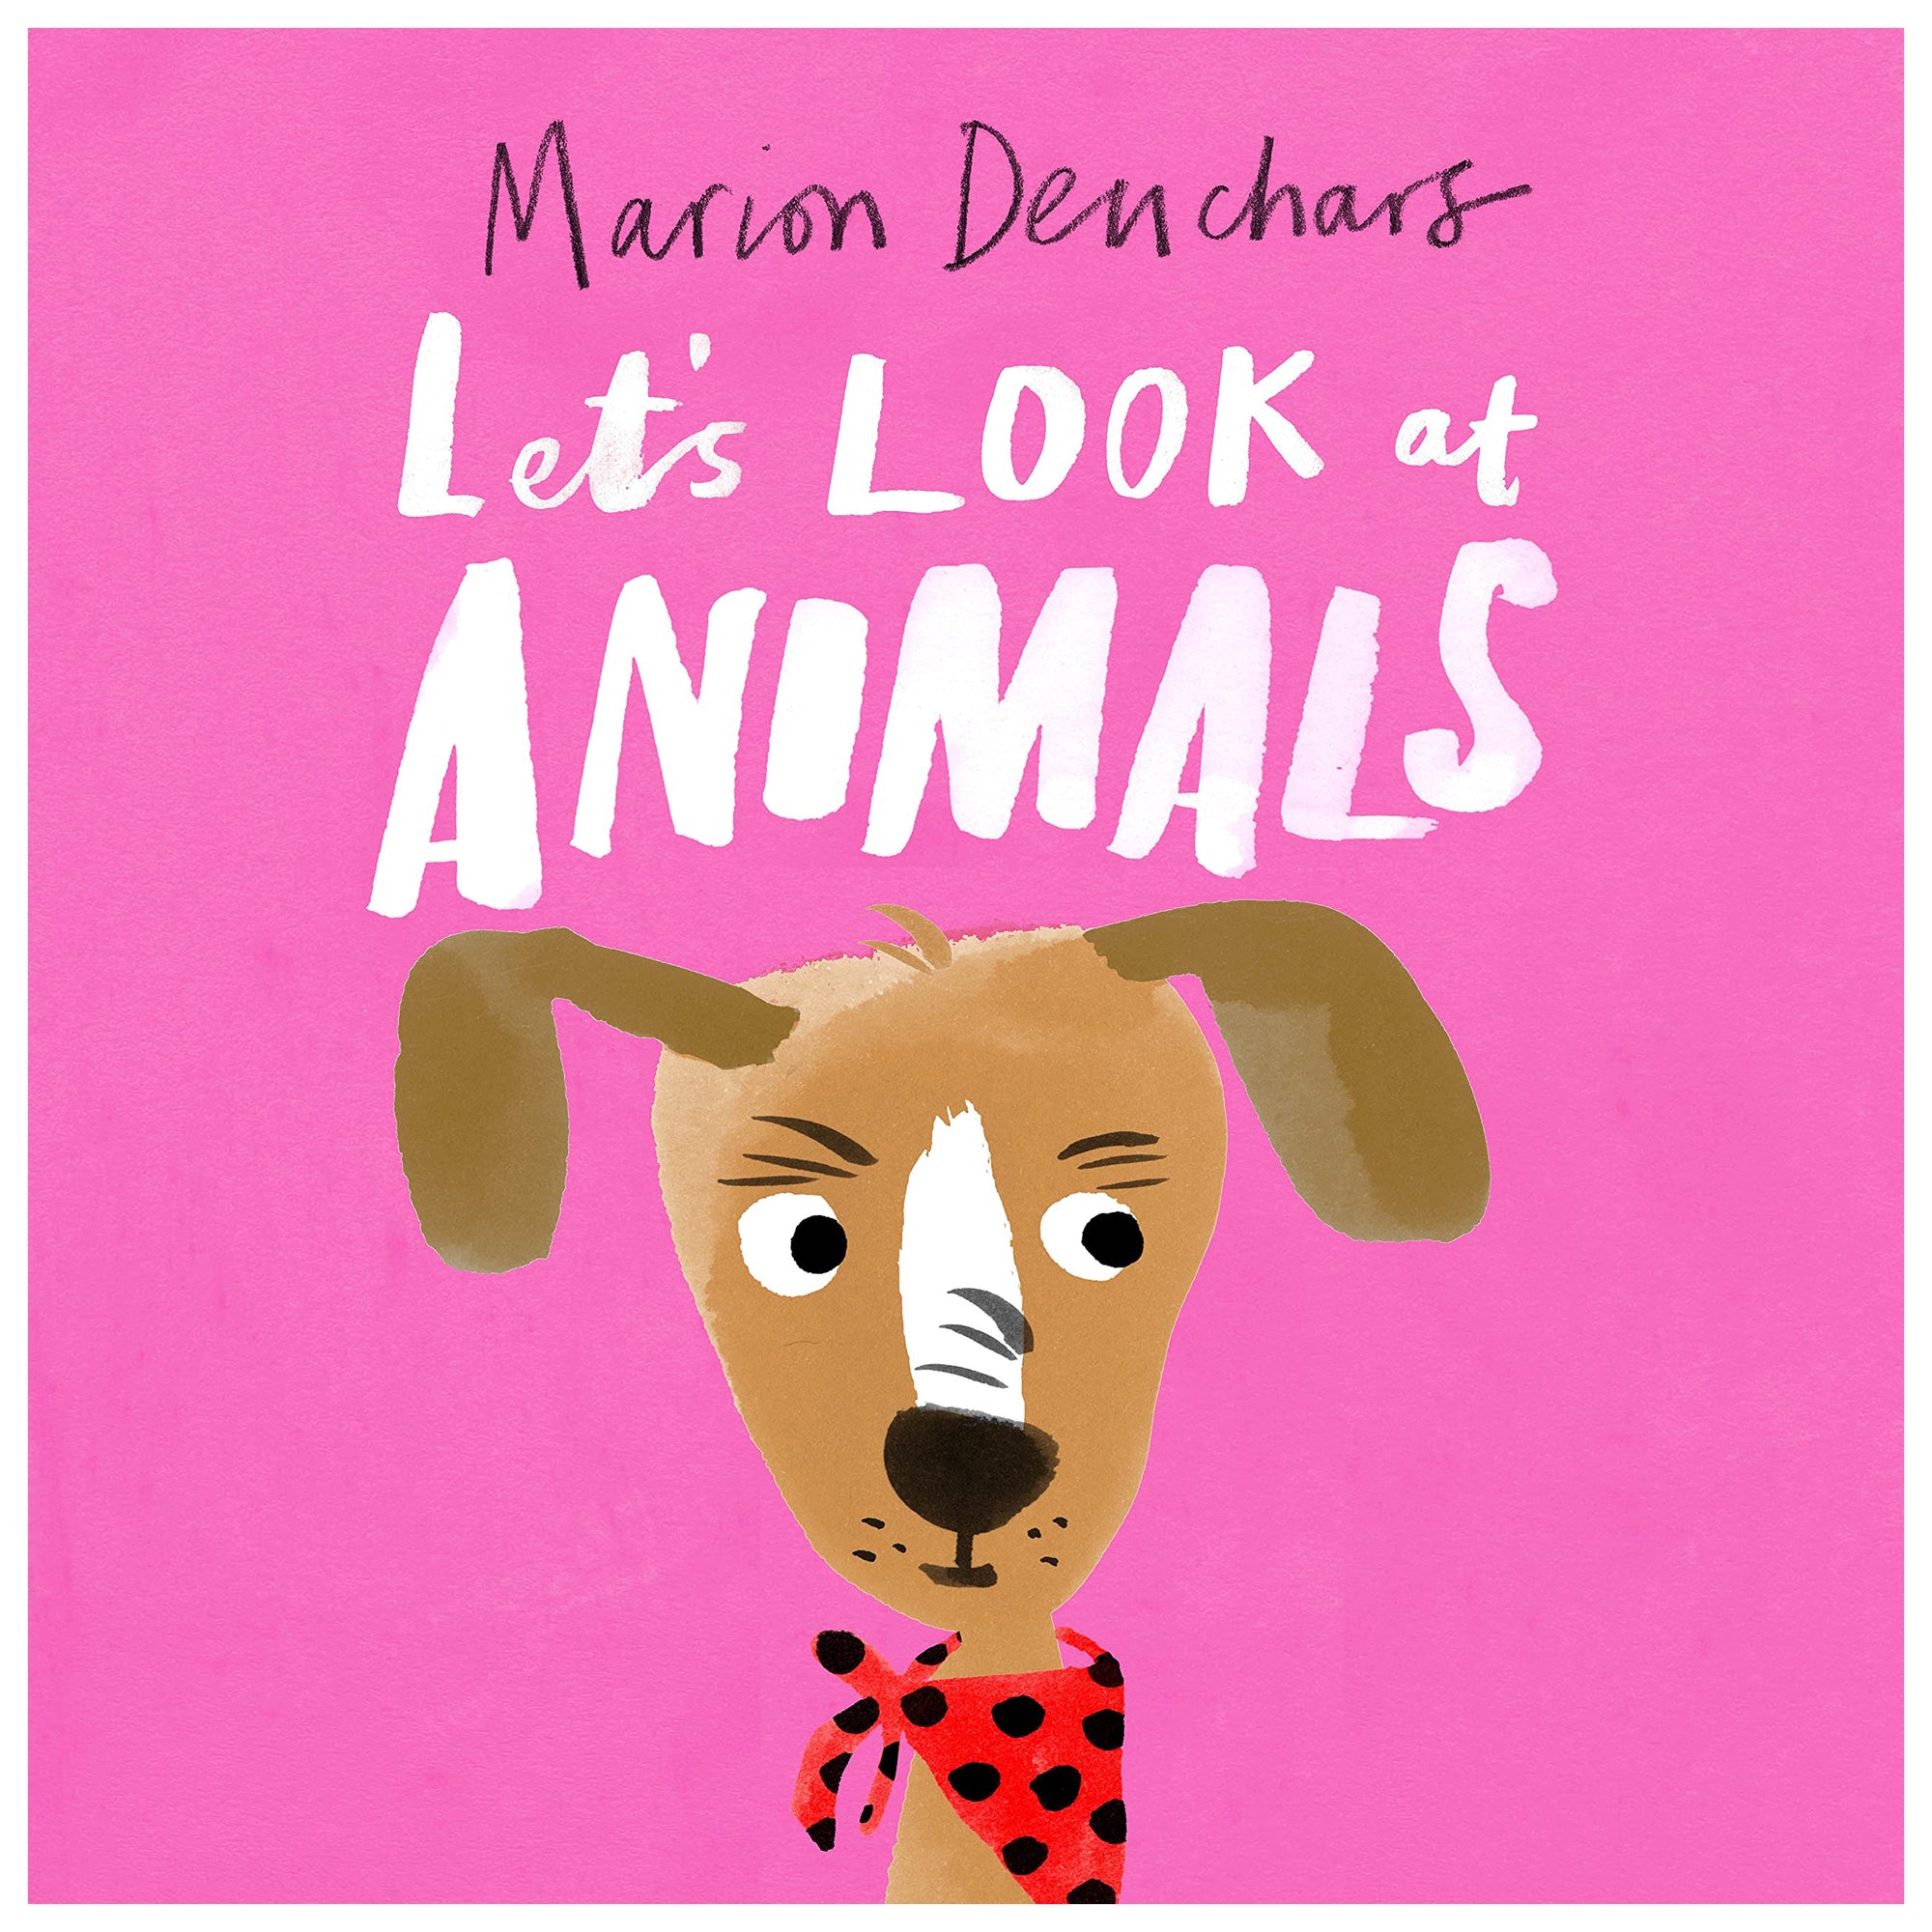 Marion Deuchars Let's Look at Animals